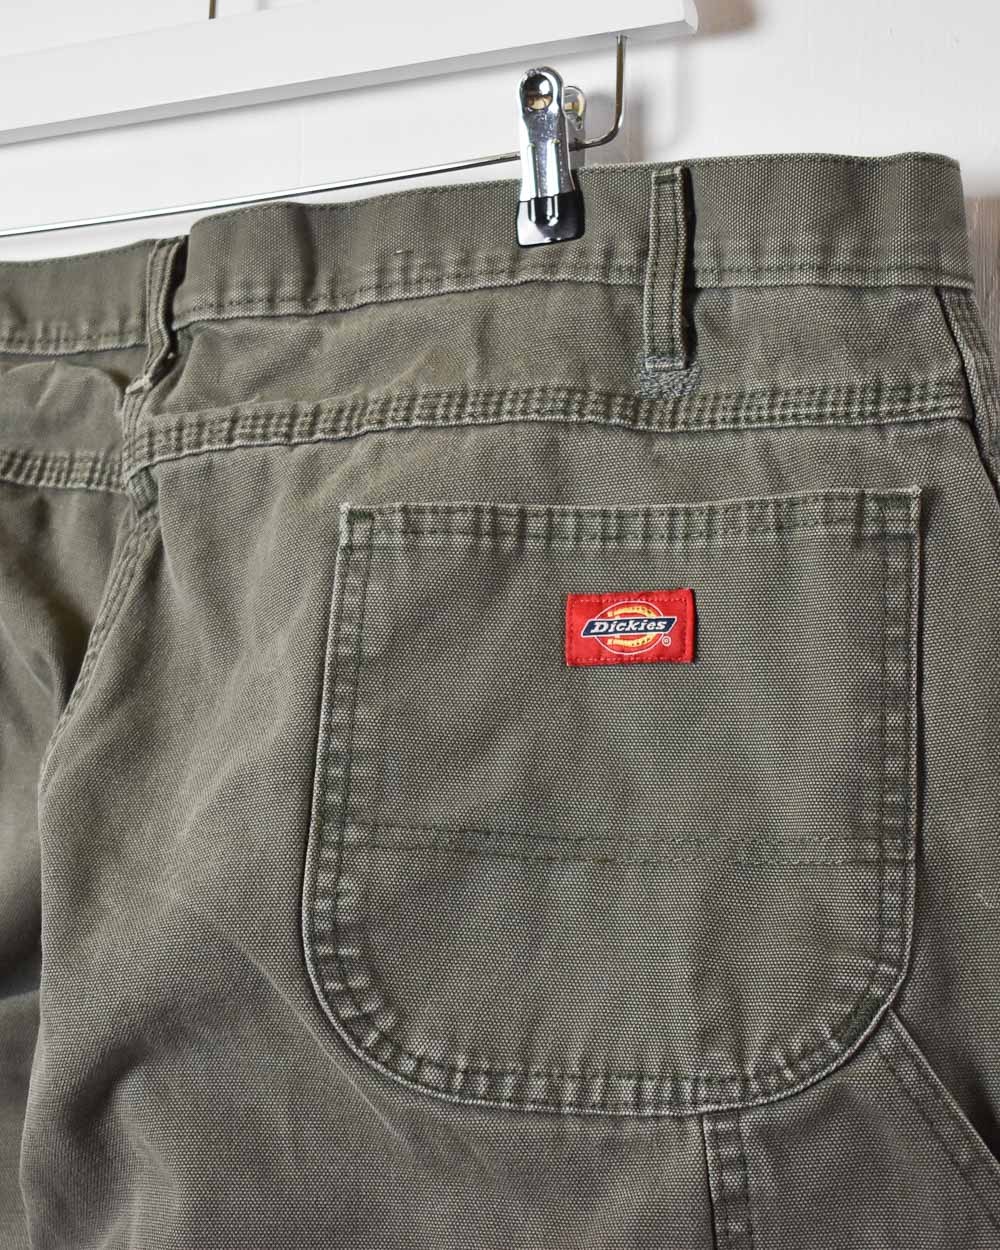 Khaki Dickies Carpenter Jeans - W43 L30